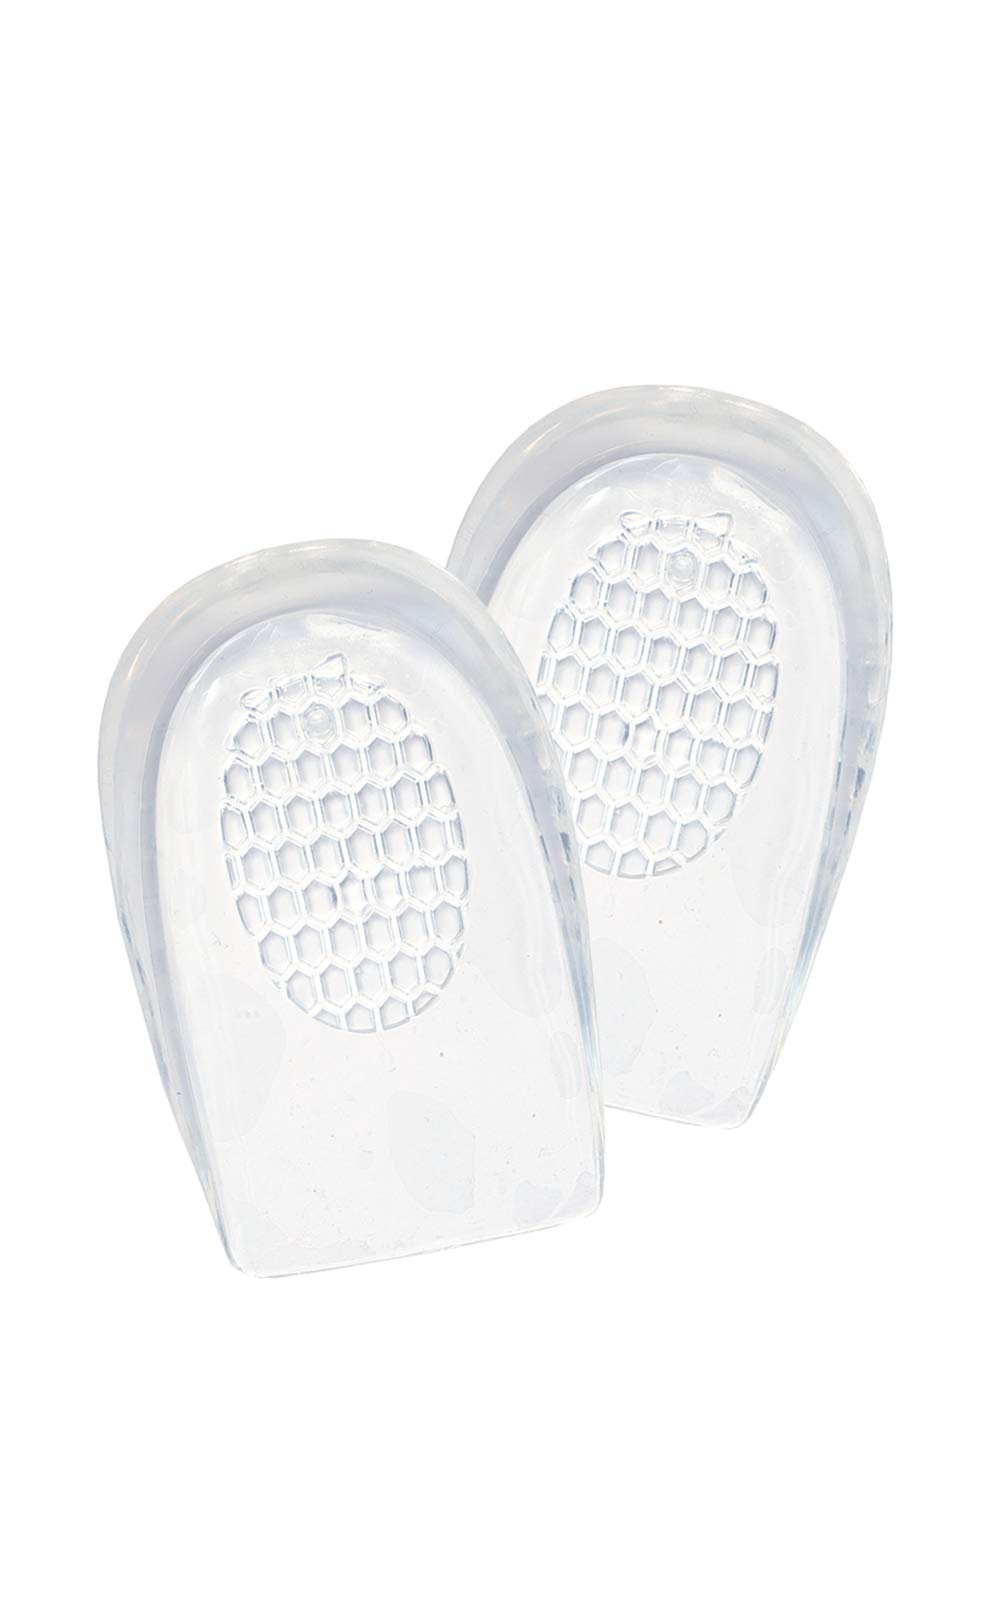 [Australia] - Orthotic Gel Heel Cup Cushion Pad, Shoe Insoles Inserts for Heels, Kaps Smart (7-12 UK / 40-46 EUR / Men) 7-12 UK / 40-46 EUR / Men 